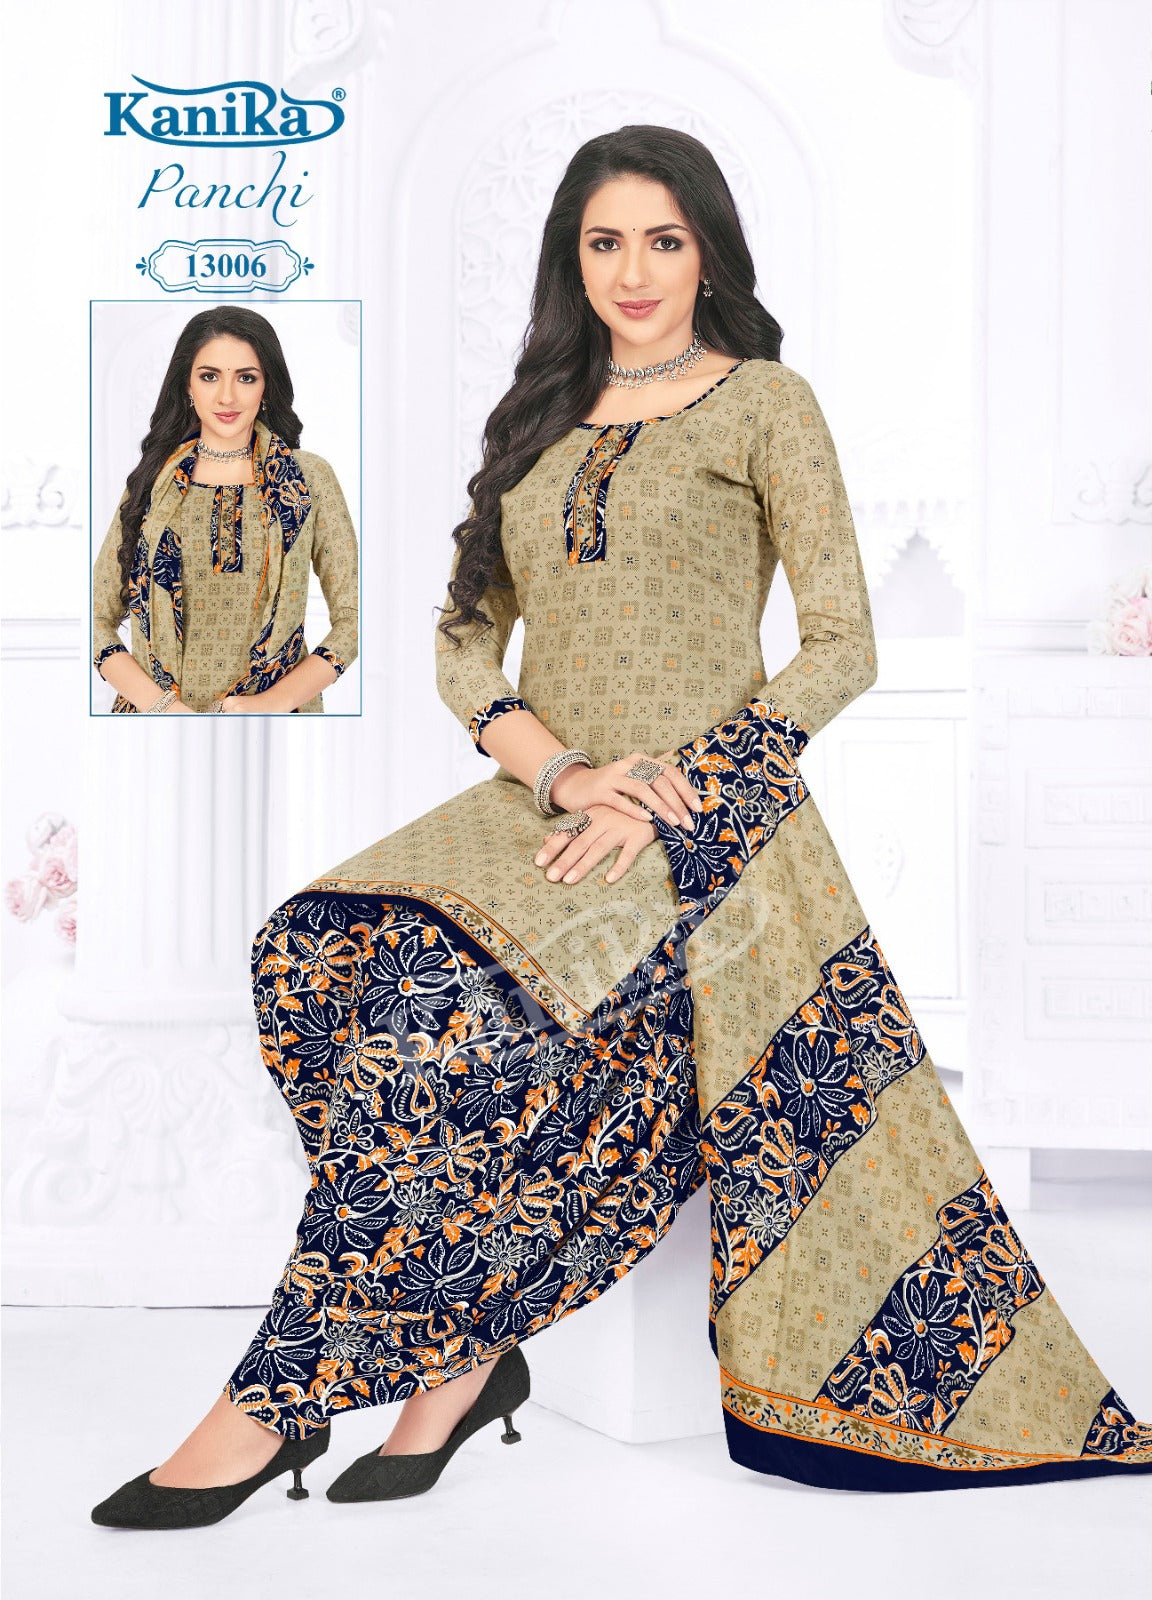 FashionStylus printed Cotton Patiyala Dress Material